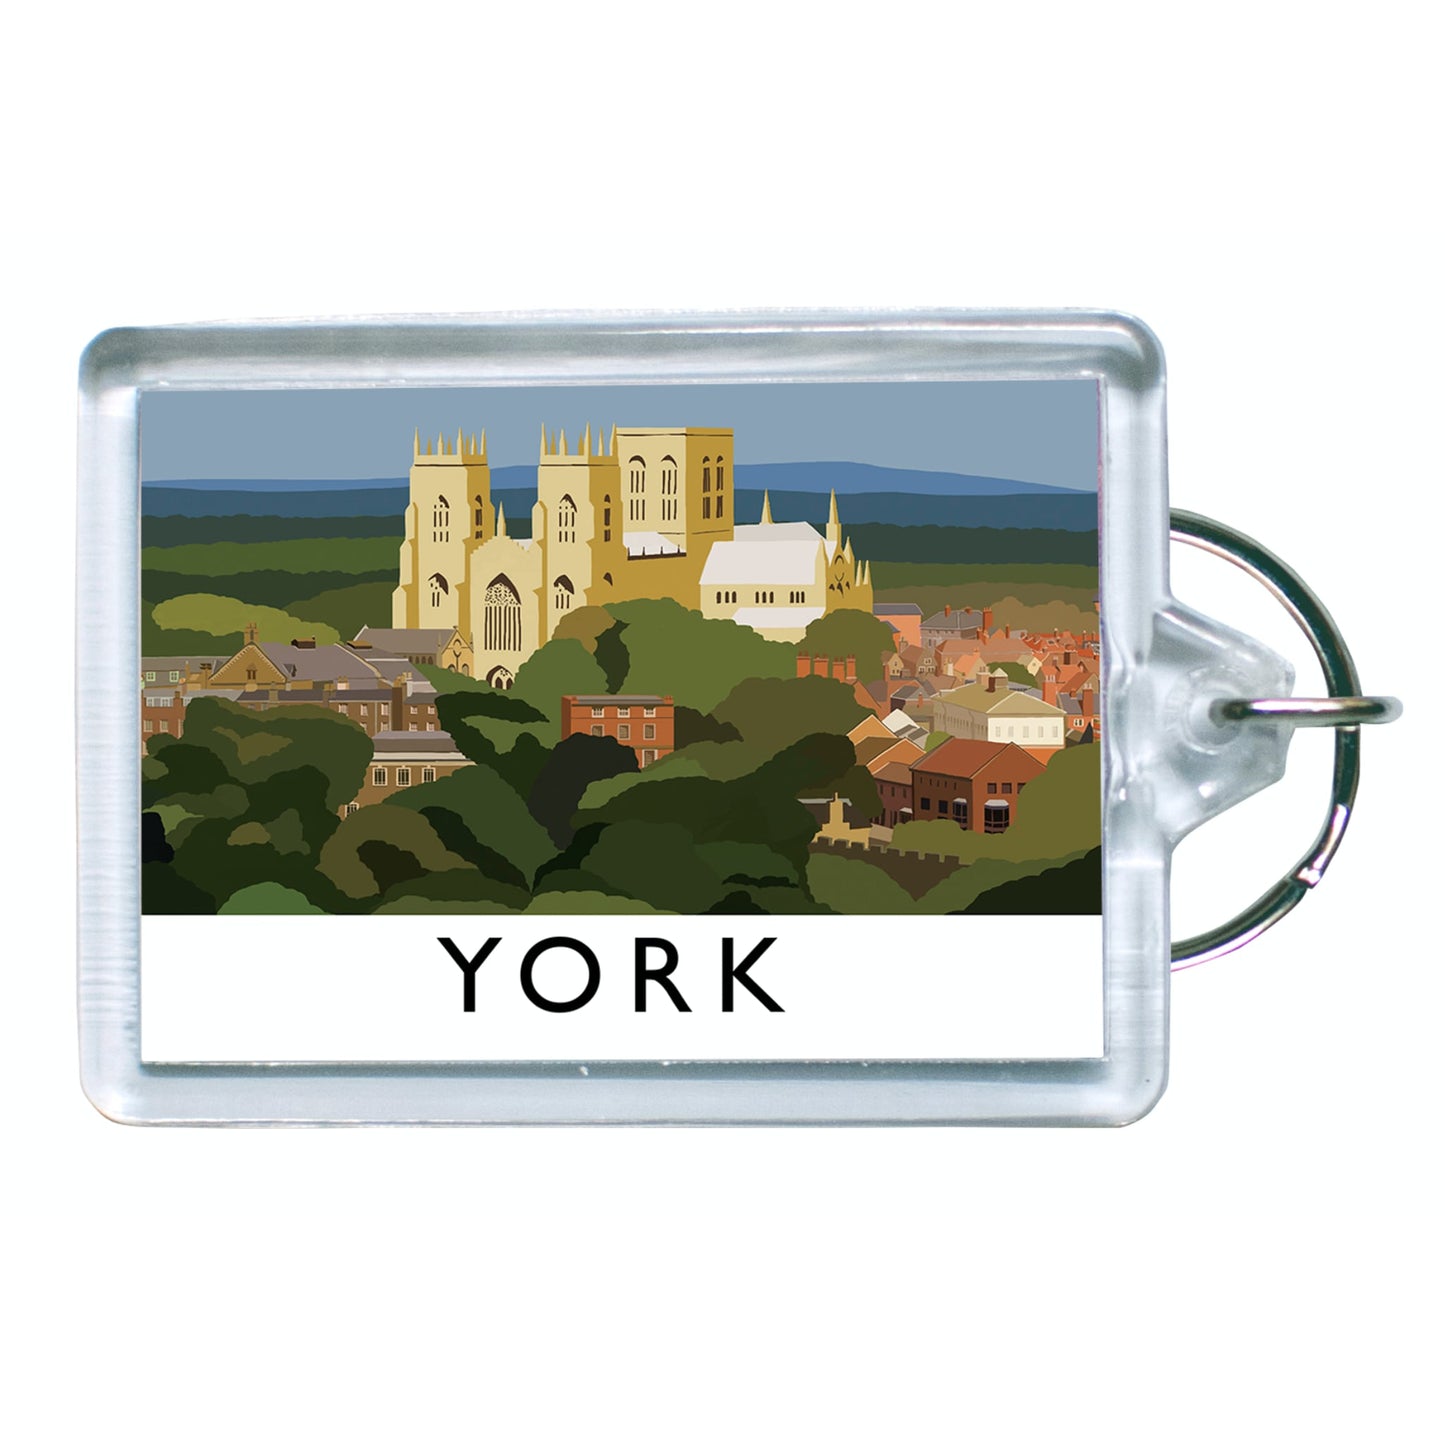 York Keyring - The Great Yorkshire Shop